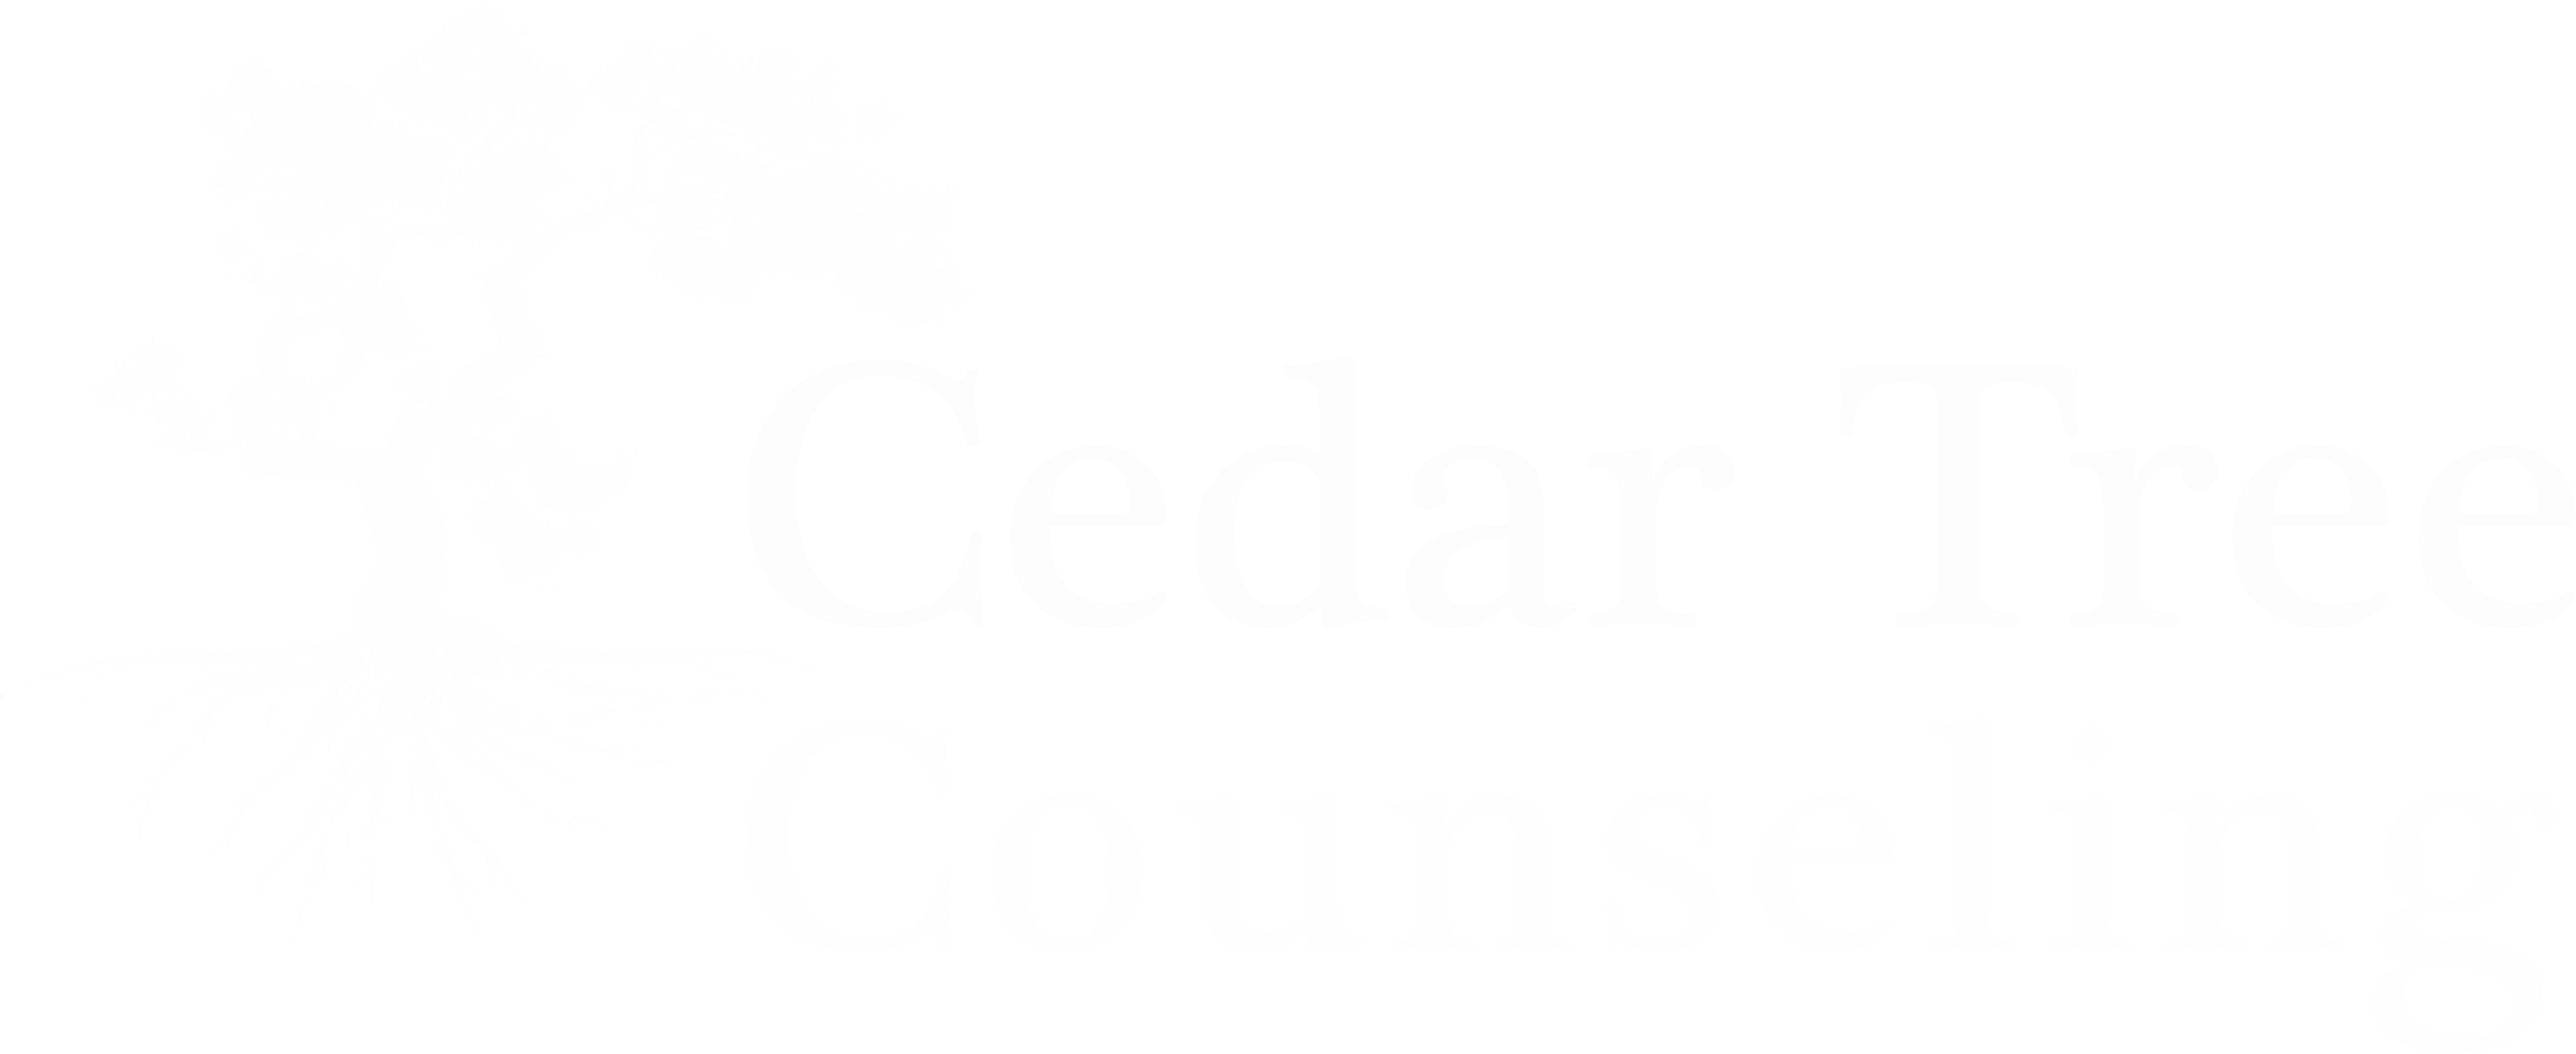 Cedar Tree Counseling Logo - Stadium Australia (2916x1259), Png Download